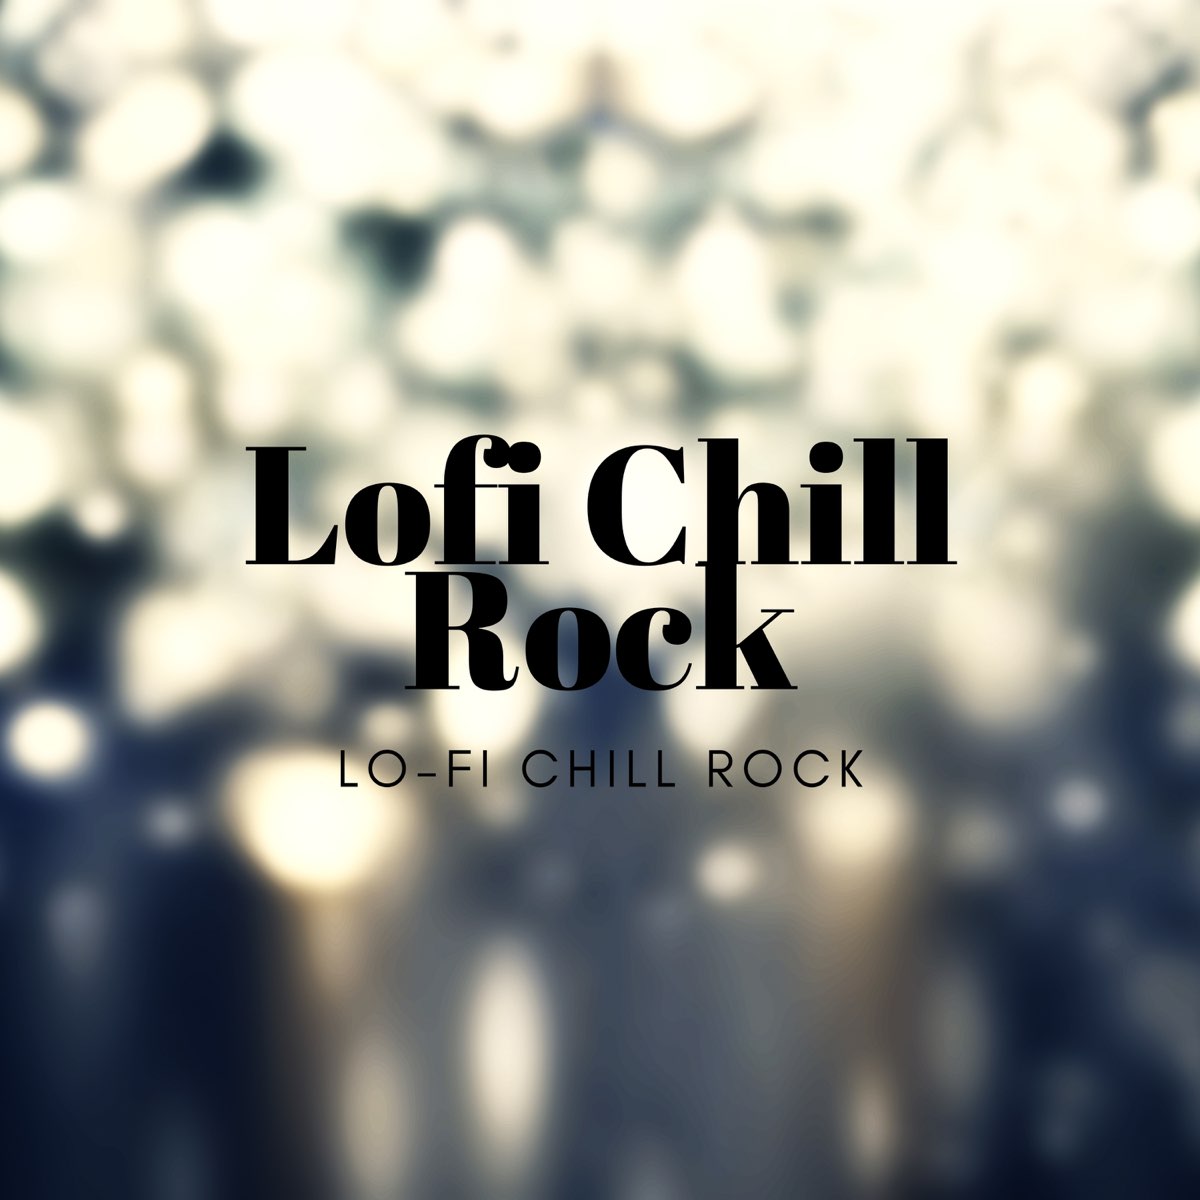 Chill Rock. Fi chill